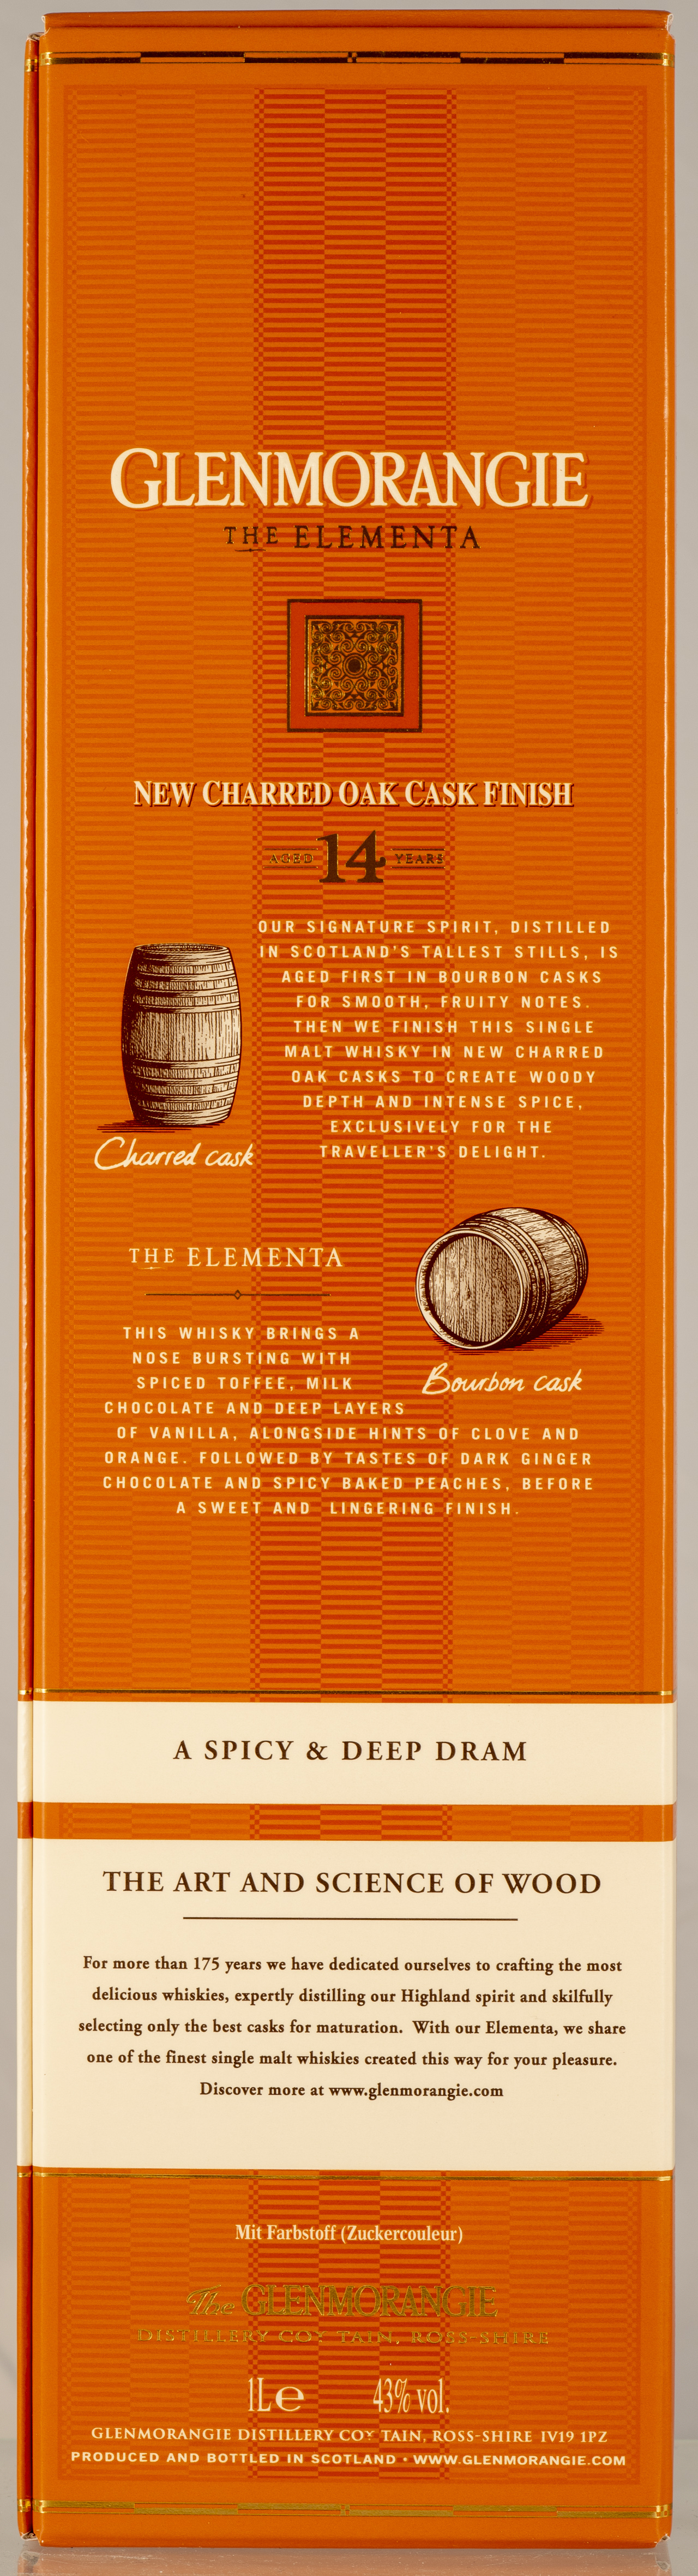 Billede: PHC_7072 - Glenmorangie The Elementa 14 - box back.jpg